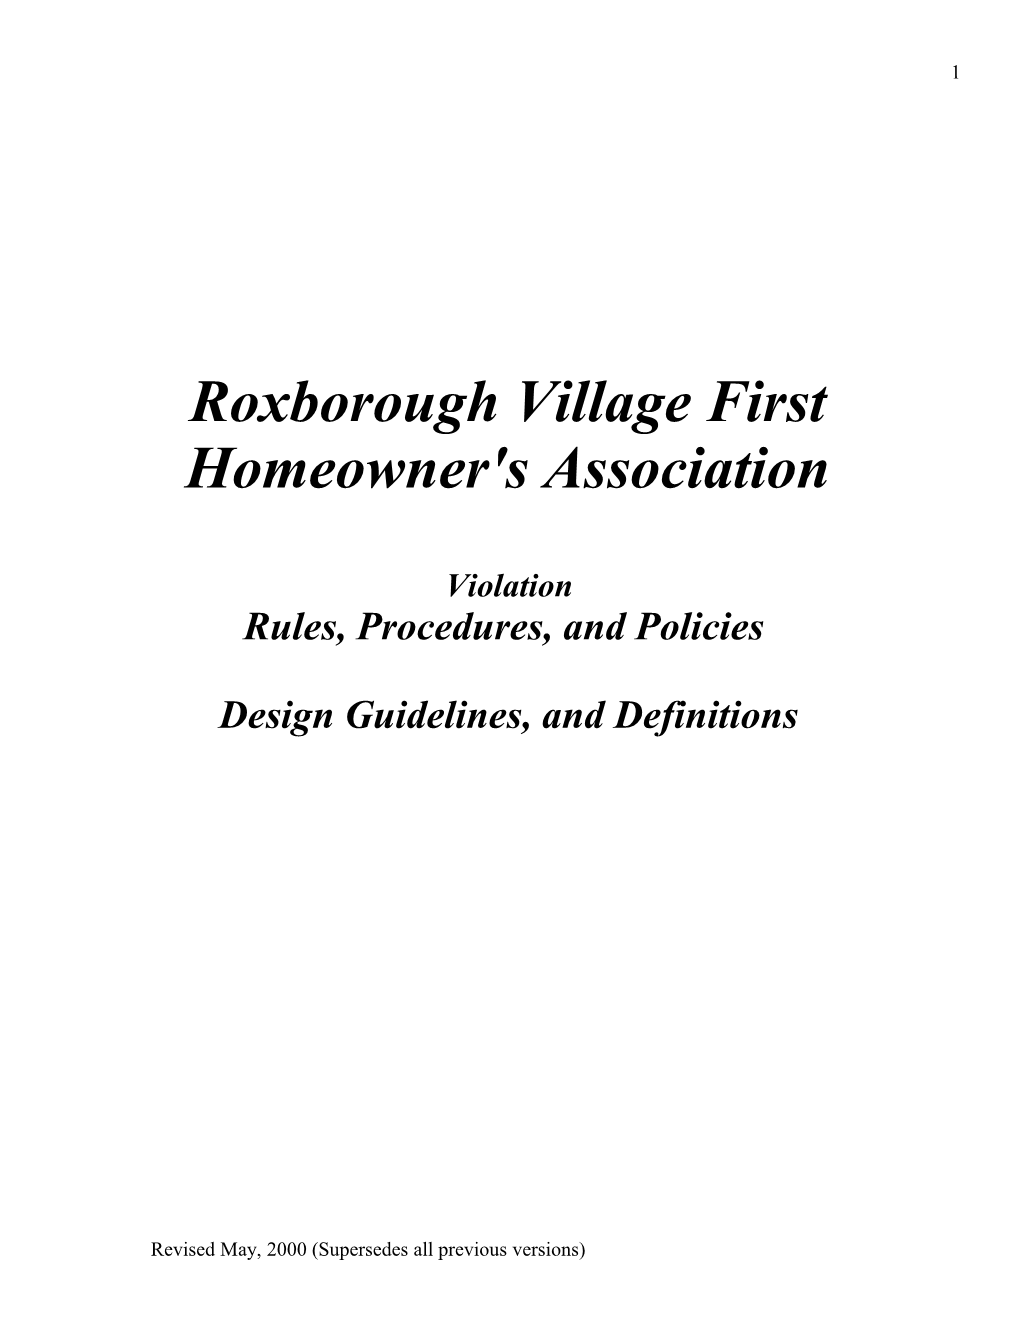 Roxborough Village First Homeowner's Association